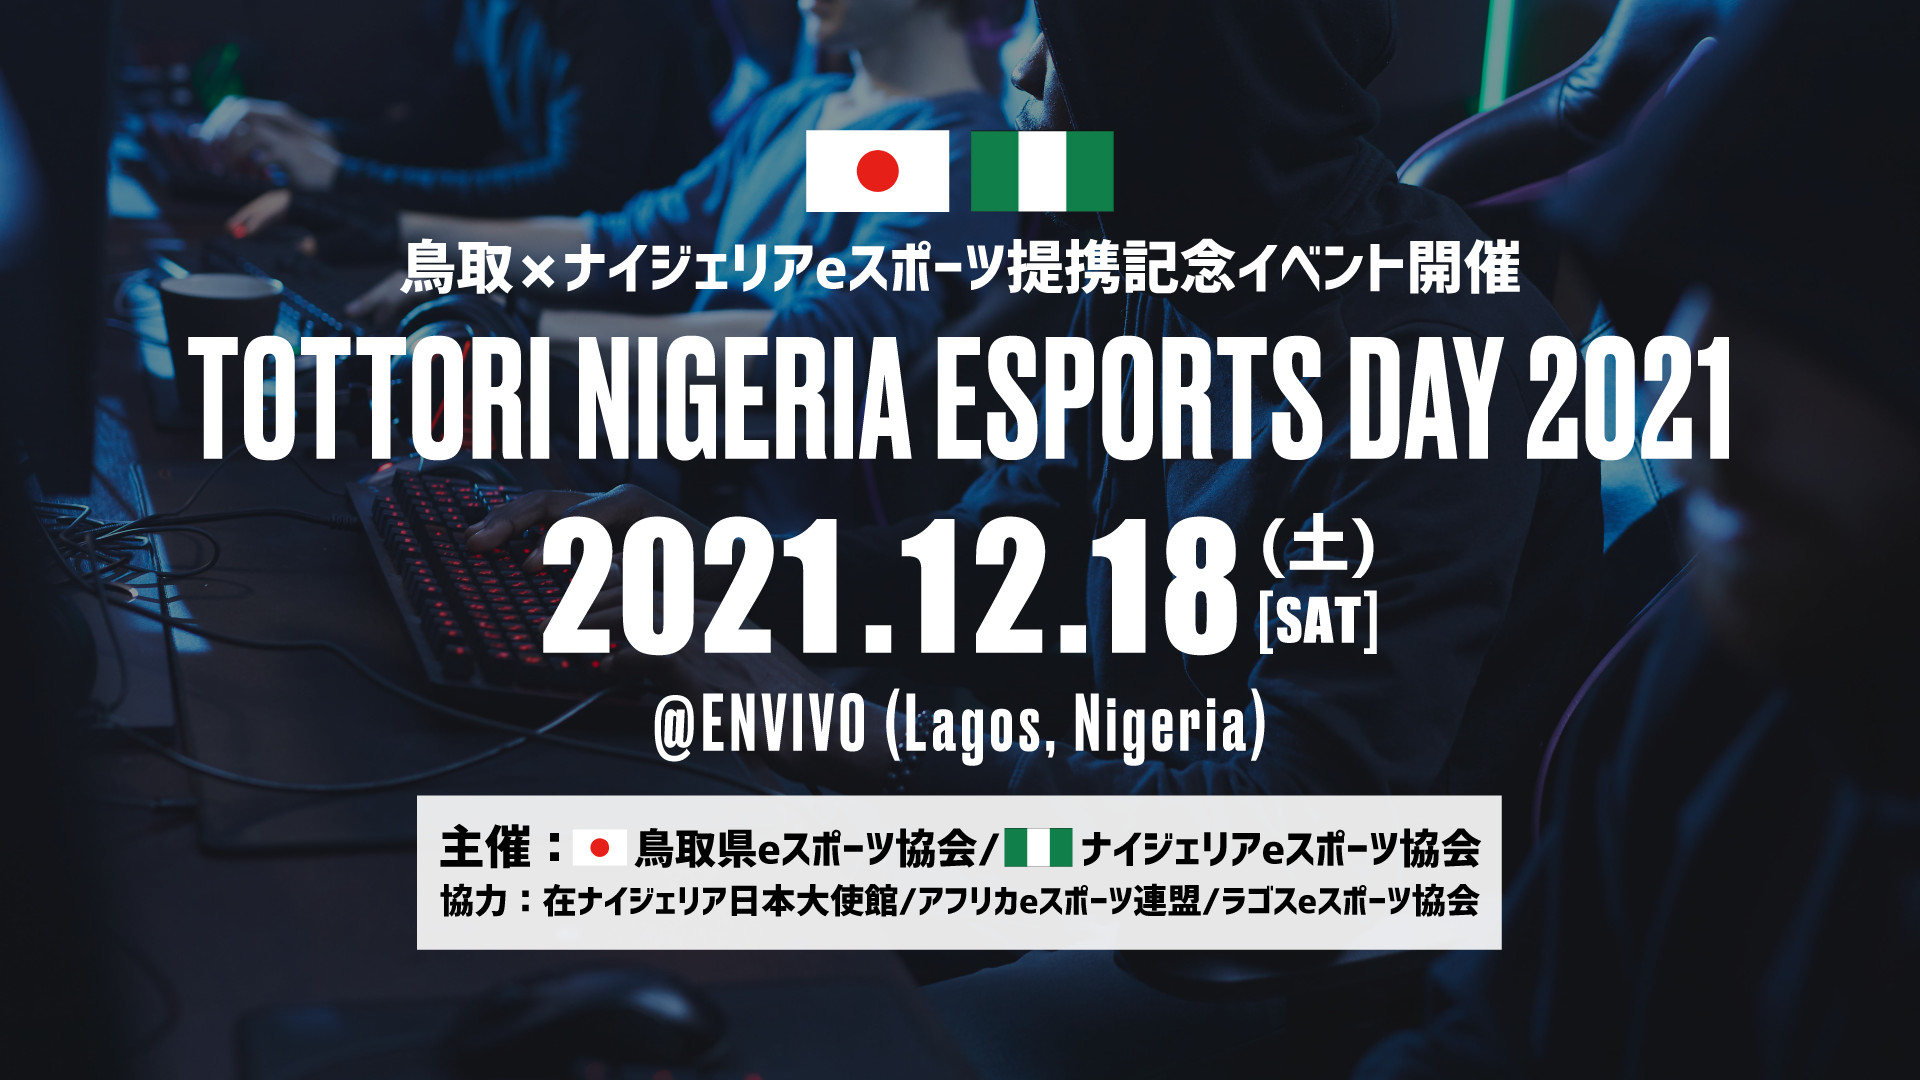 【大会情報】TNED2021-Tottori Nigeria Esports Day 2021-【2021年12月18日】